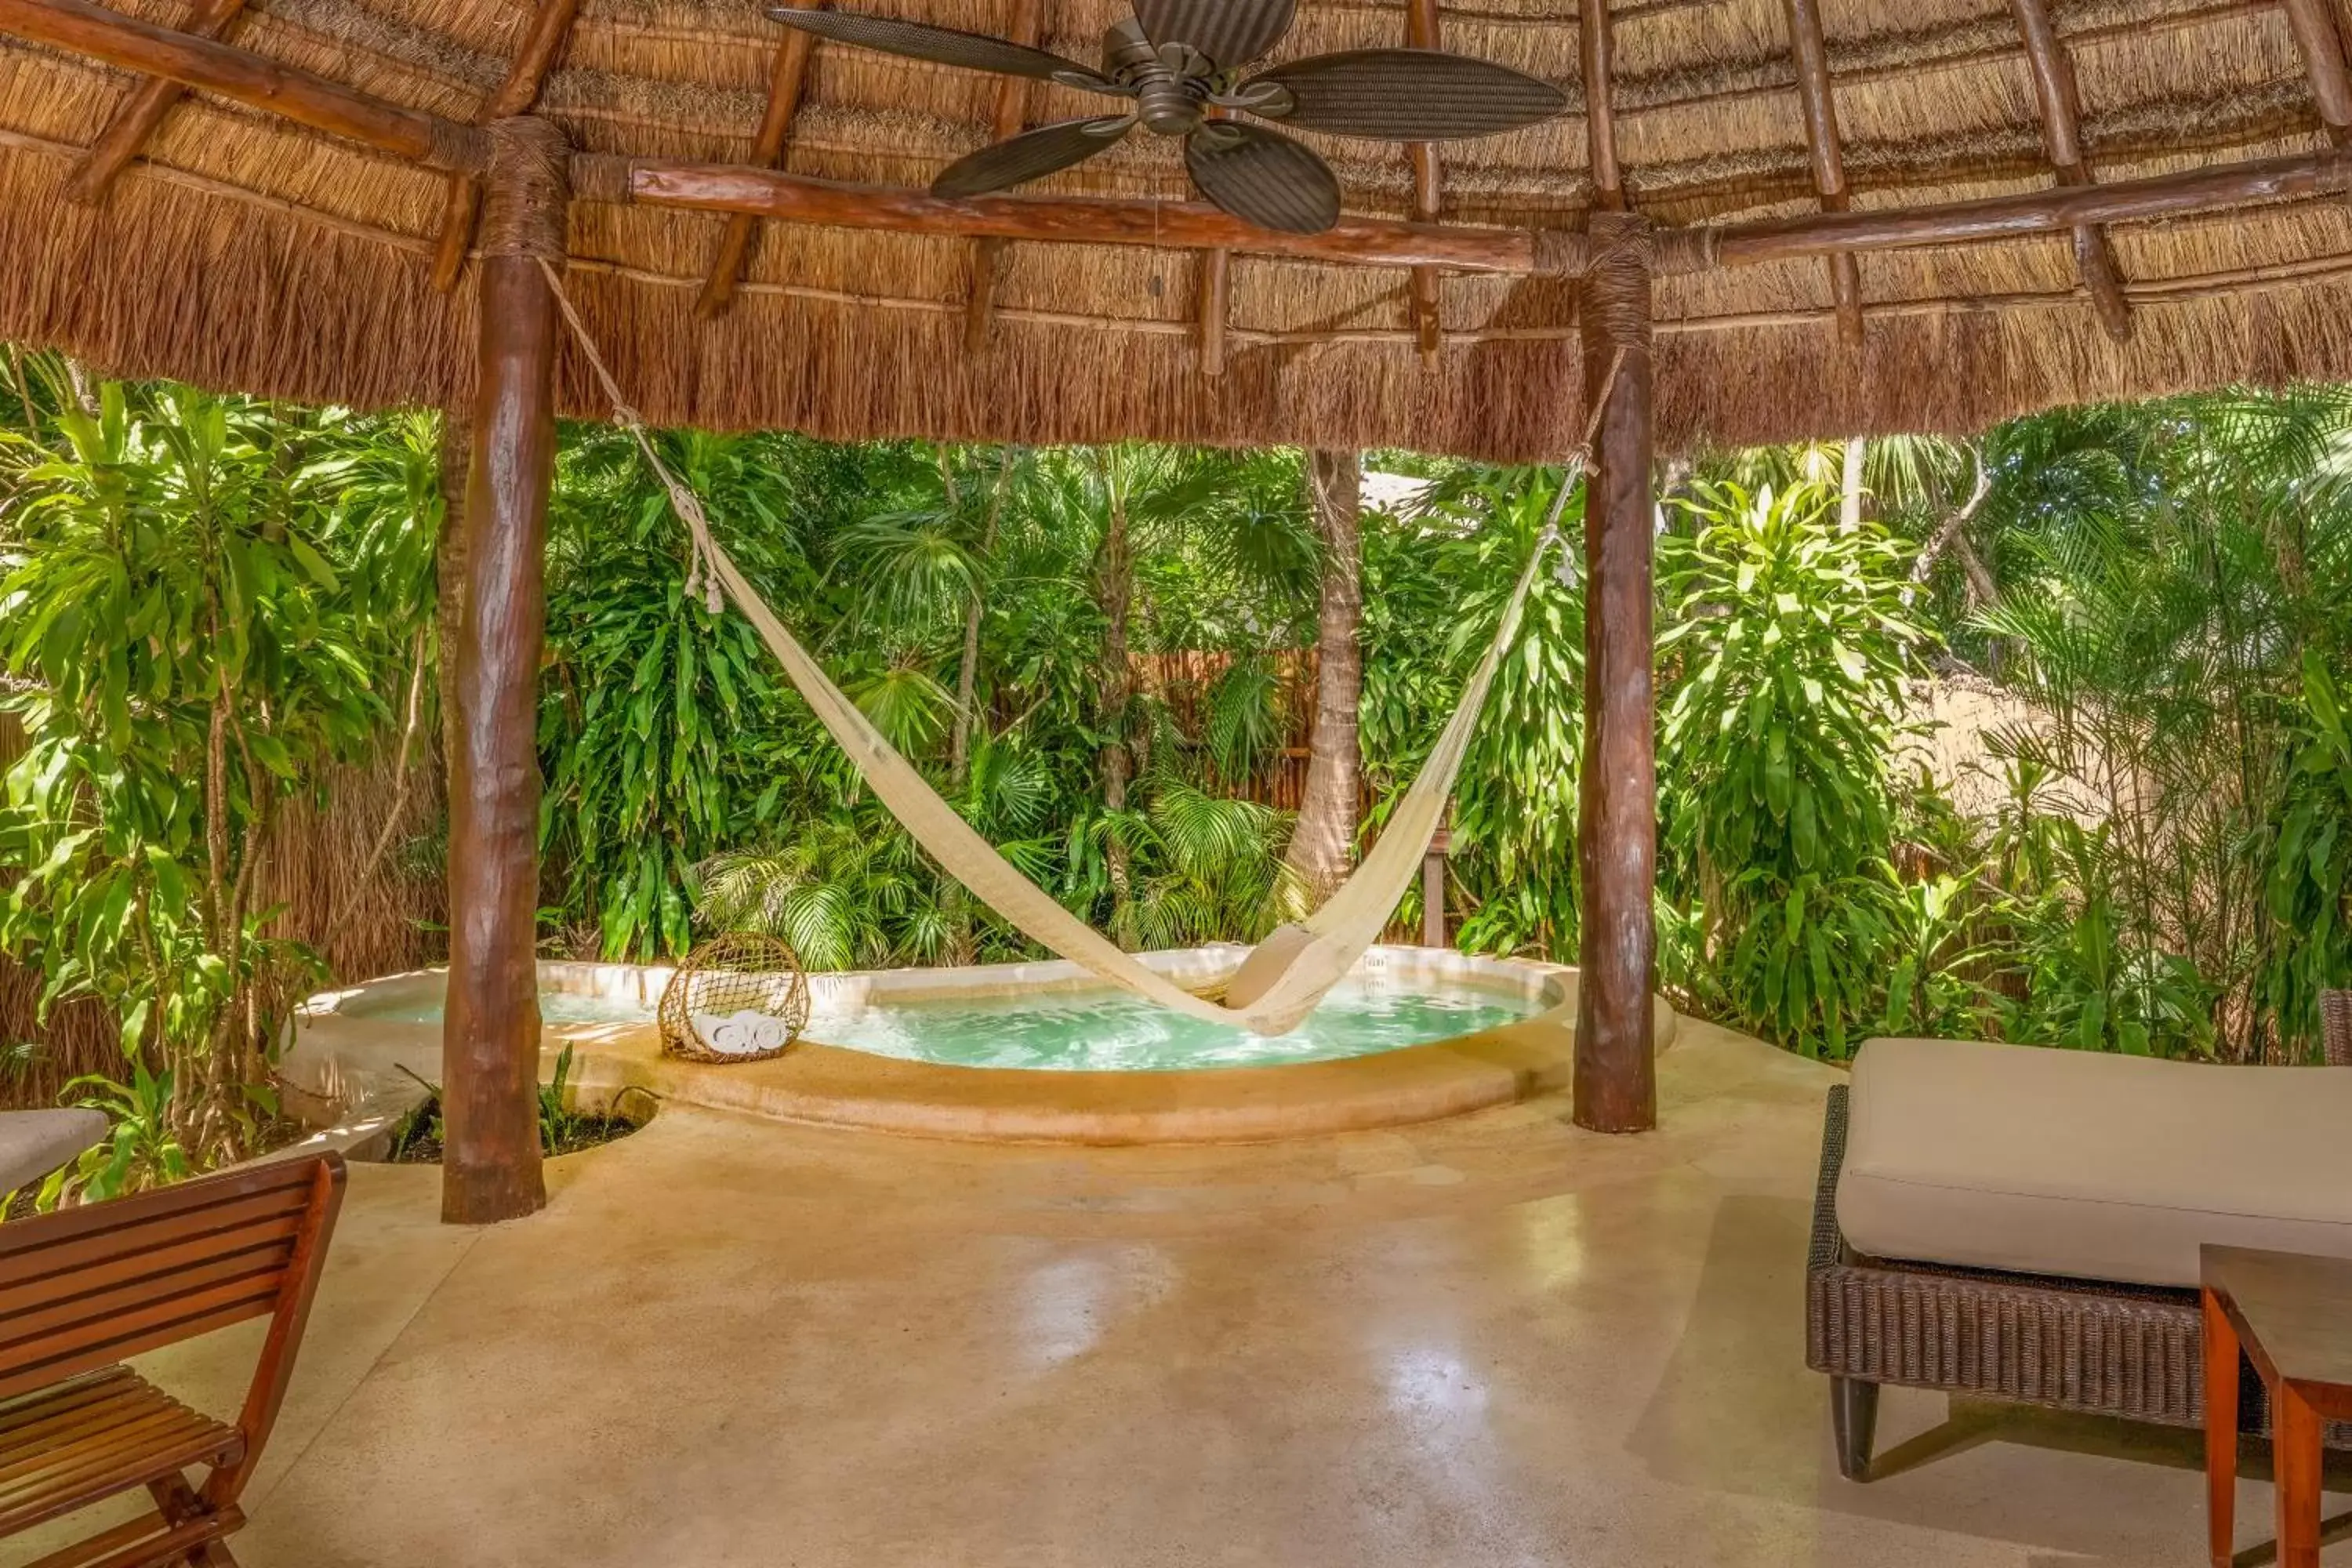 Patio, Swimming Pool in Viceroy Riviera Maya, a Luxury Villa Resort